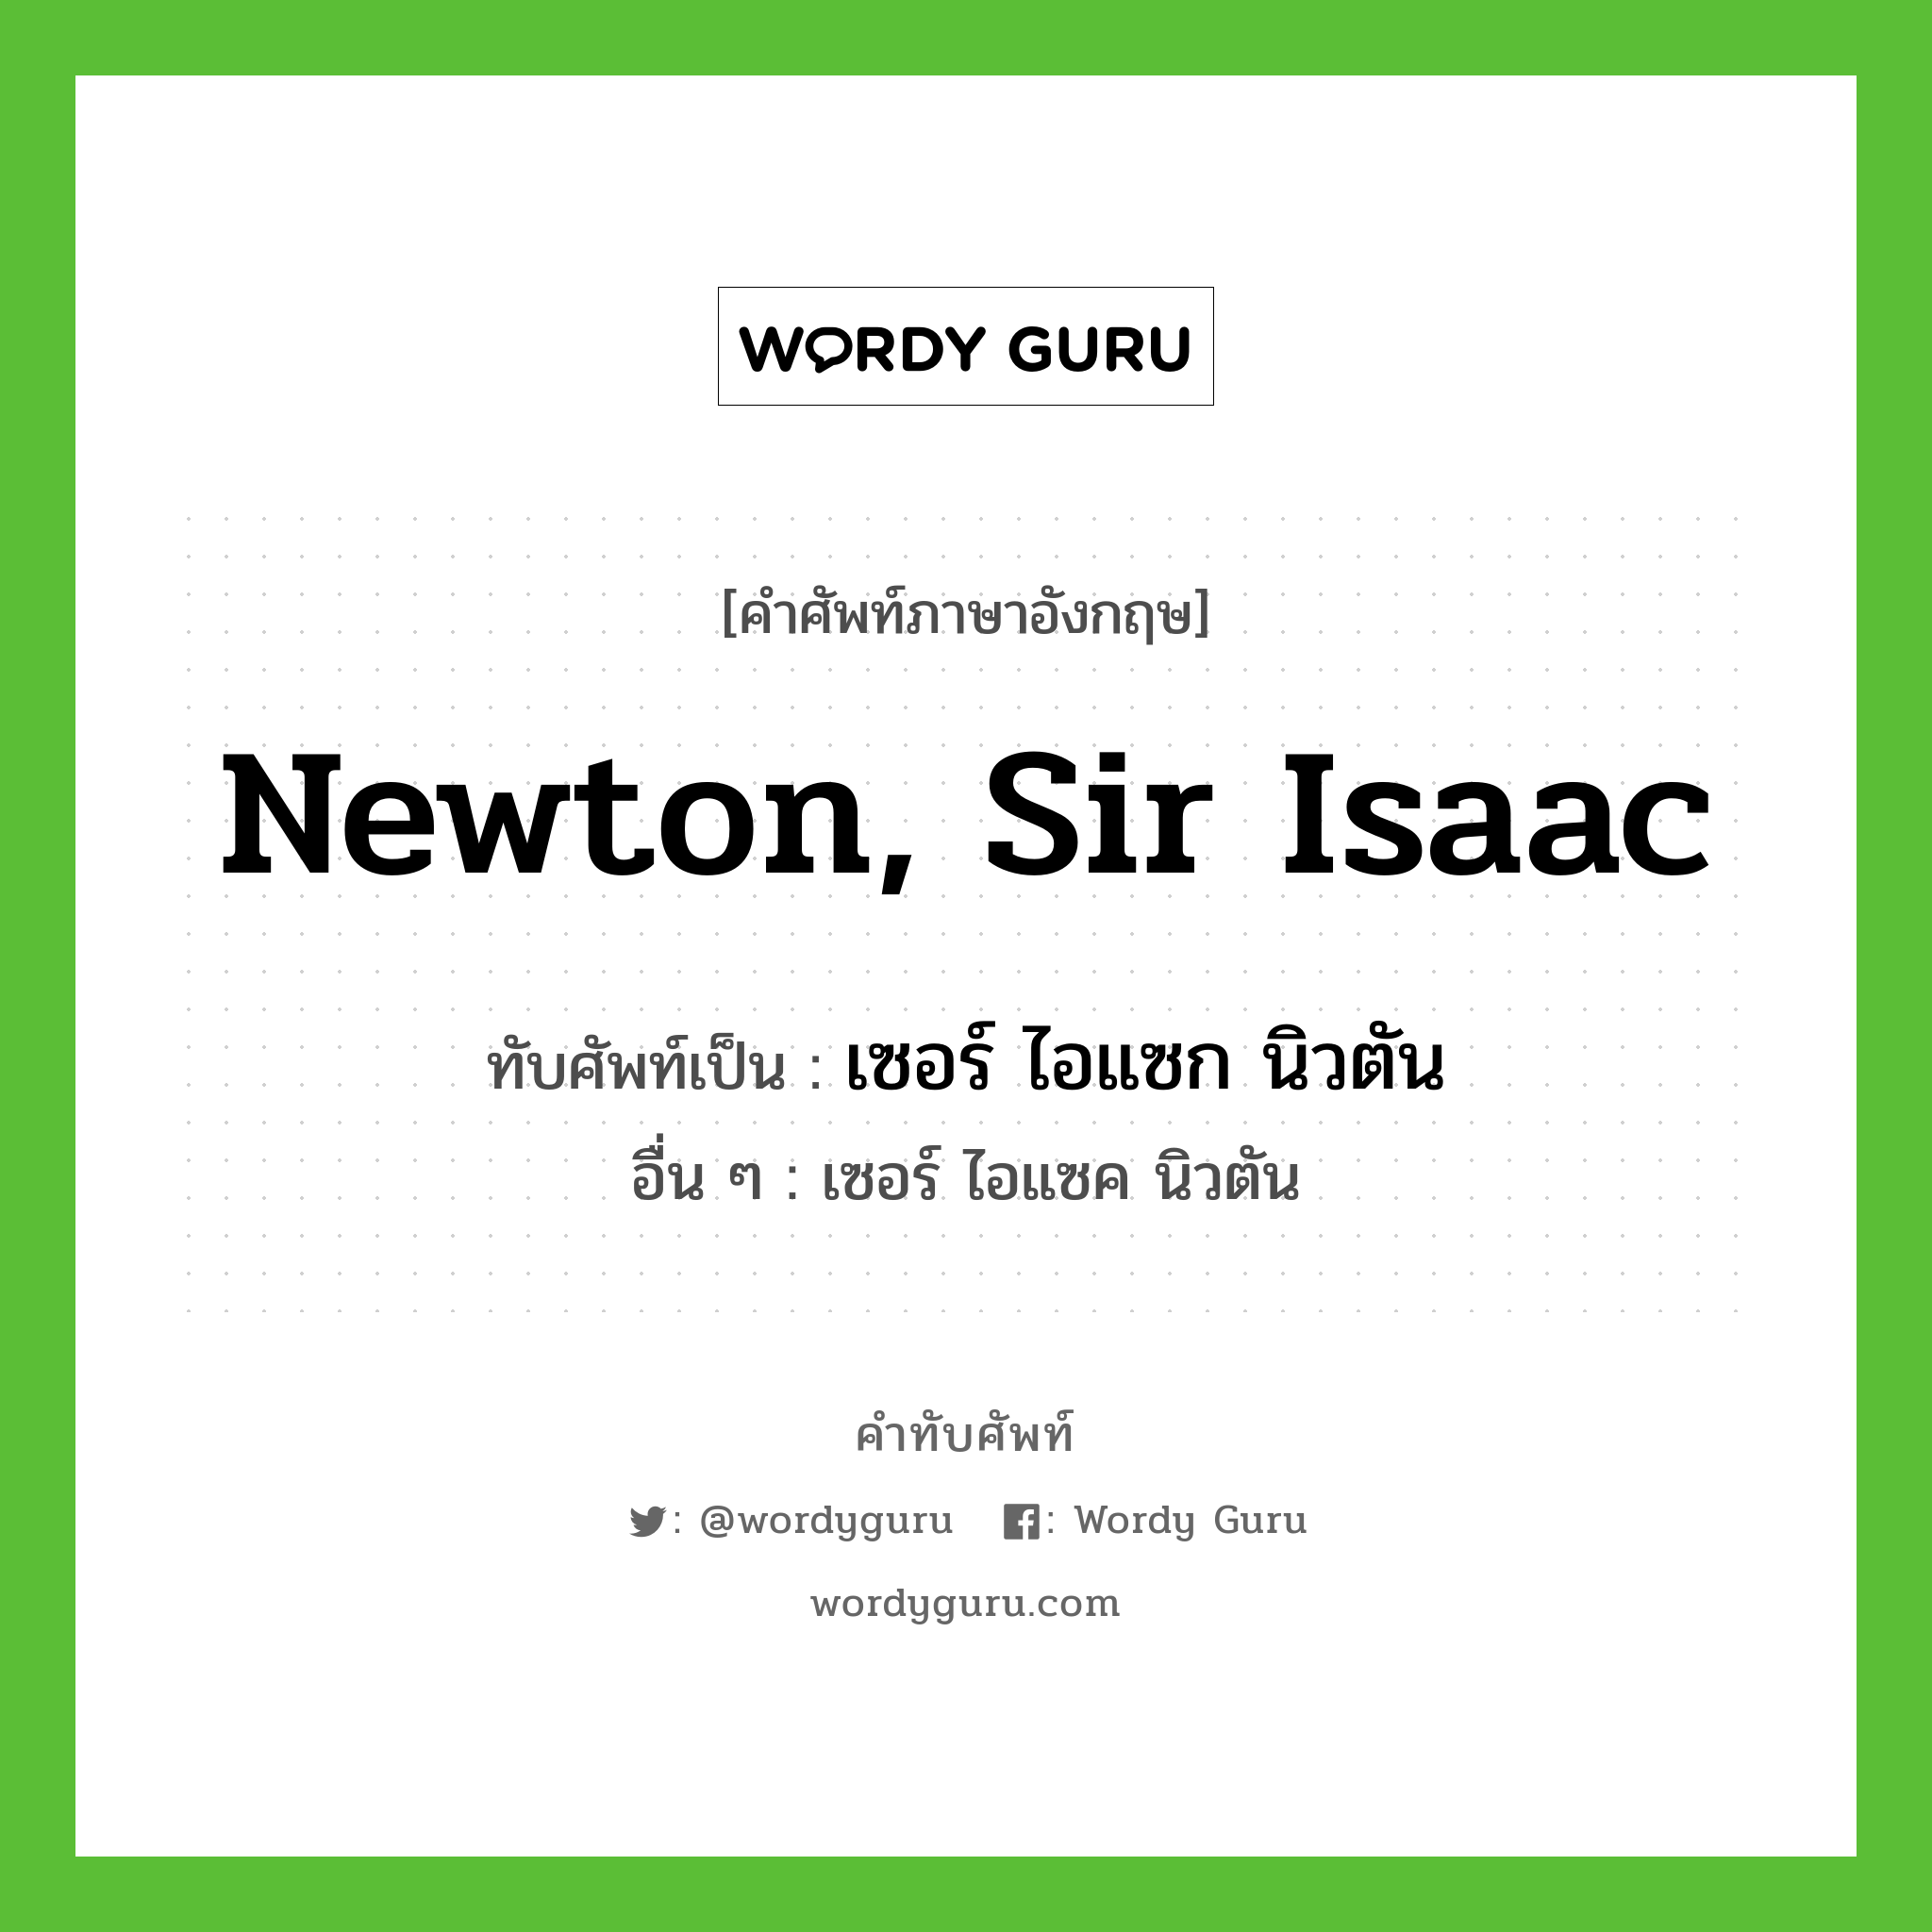 Newton, Sir Isaac เขียนเป็นคำไทยว่าอะไร?, คำศัพท์ภาษาอังกฤษ Newton, Sir Isaac ทับศัพท์เป็น เซอร์ ไอแซก นิวตัน อื่น ๆ เซอร์ ไอแซค นิวตัน